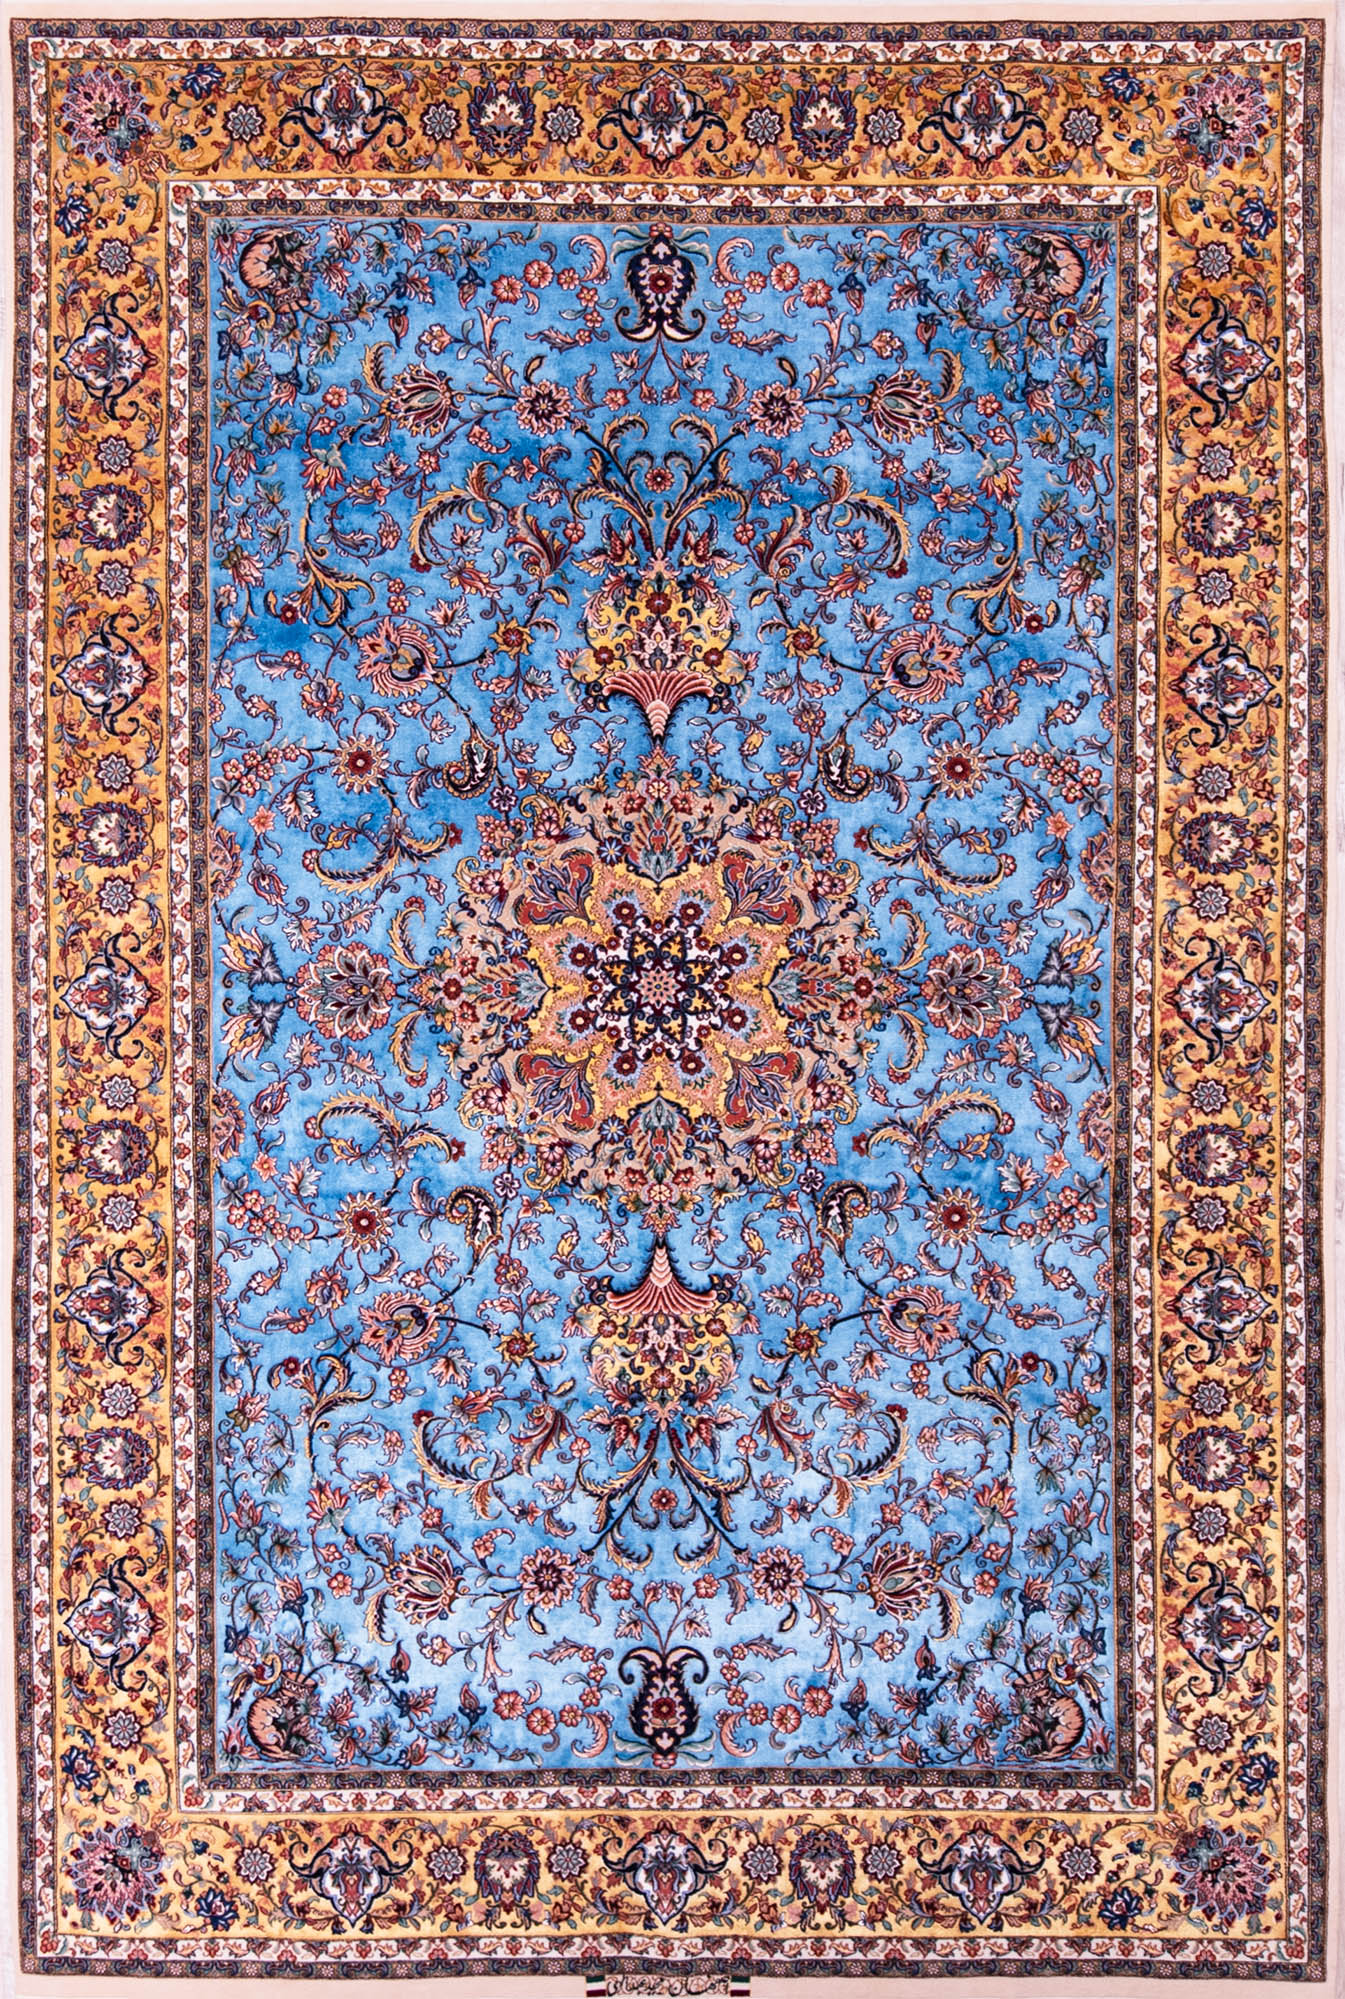 Iranian Silk Carpet